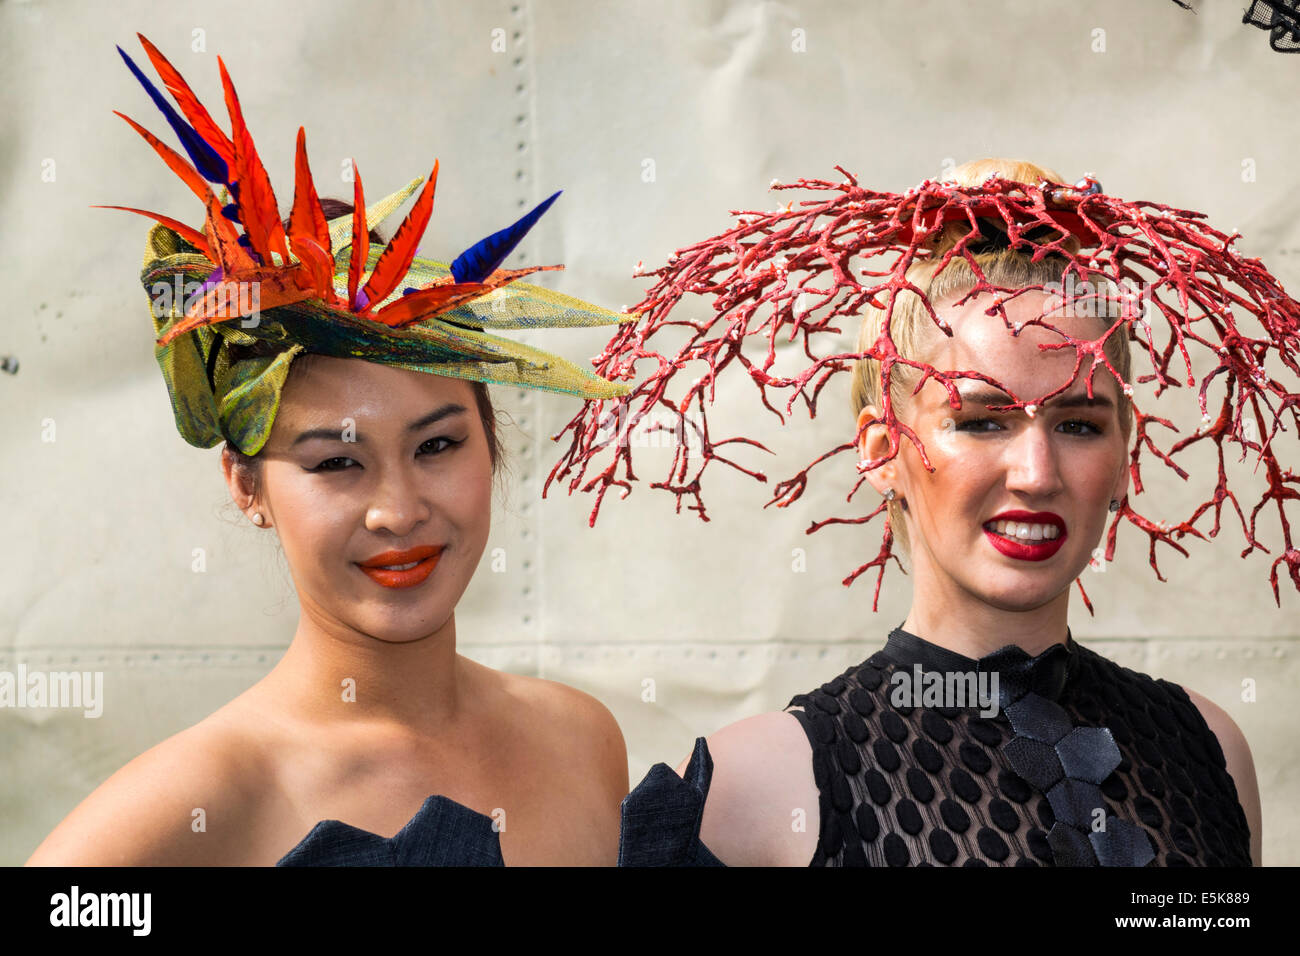 Melbourne Australia,Swanston Street,City Square,festival,Lord Mayor's Student Welcome,fashion show,runway,woman female women,model,posing,striking pos Stock Photo